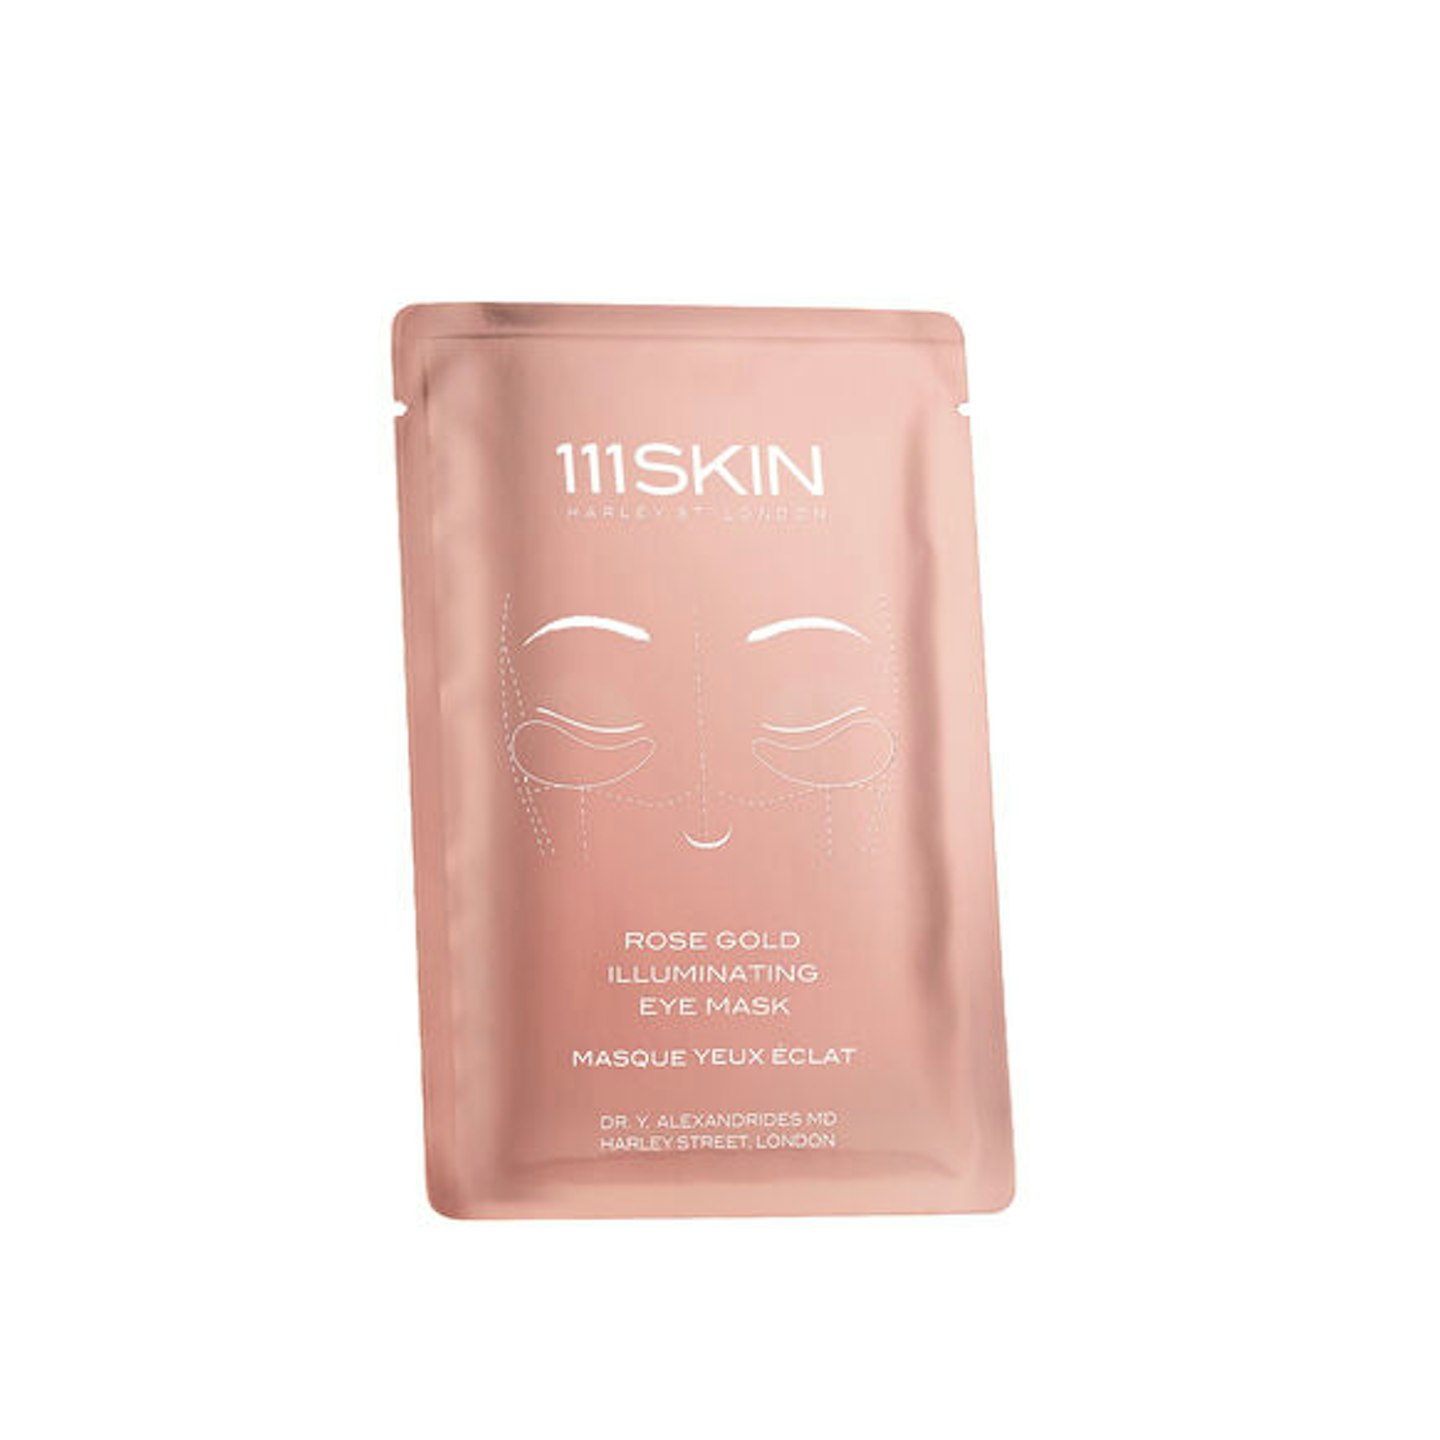 111Skin Rose Gold Illuminating Eye Masks